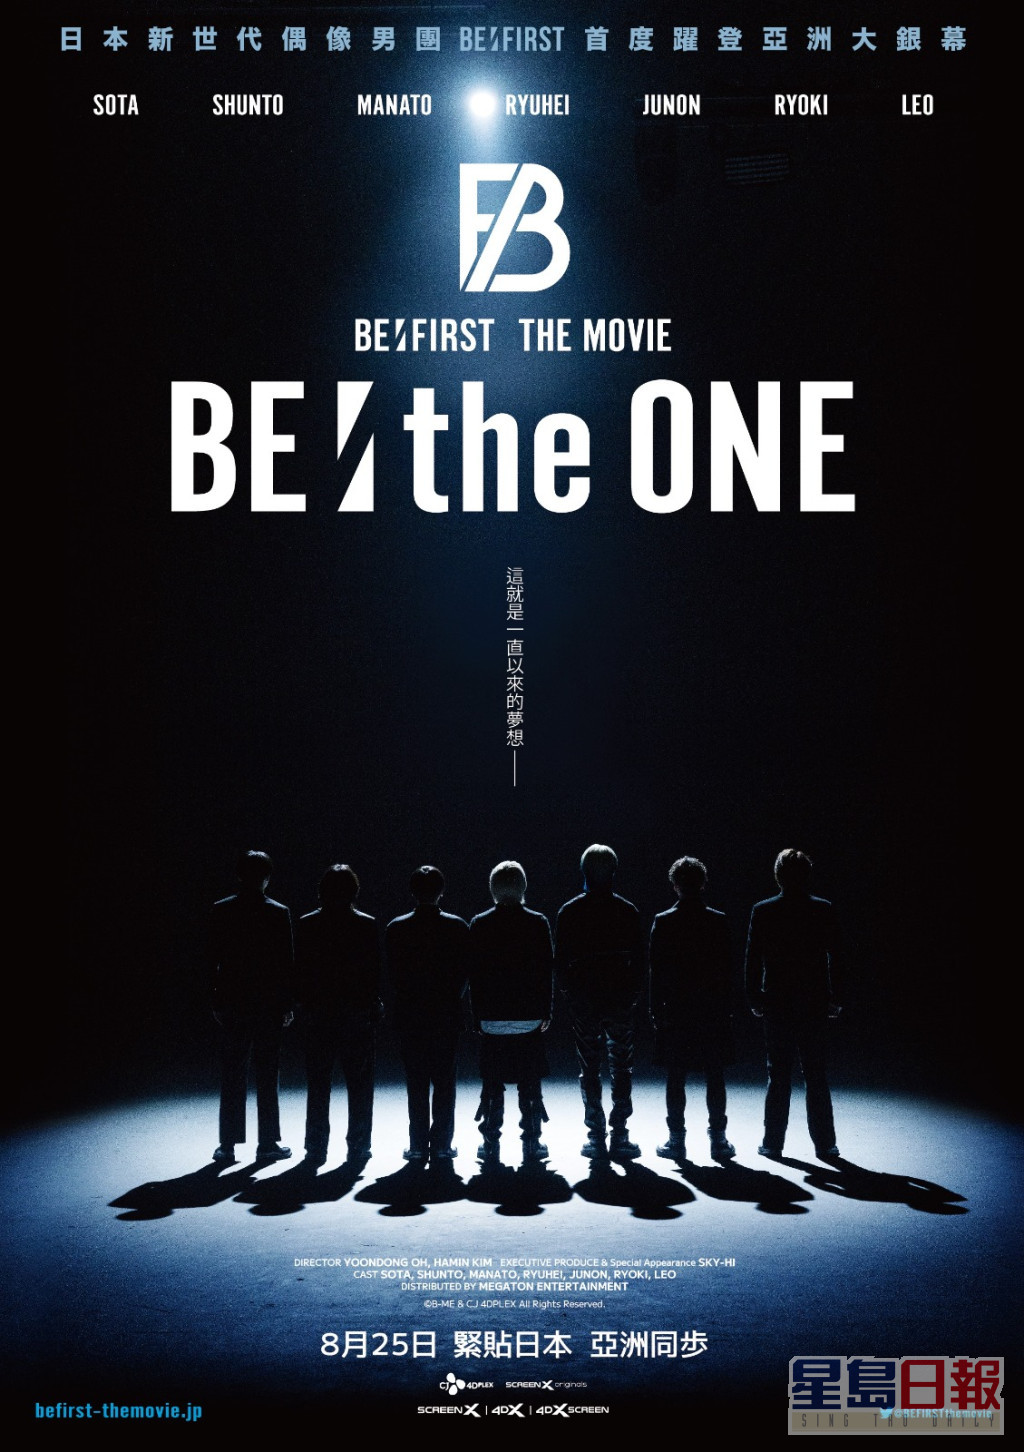 電影《BE:the ONE》將與日本同步公映。